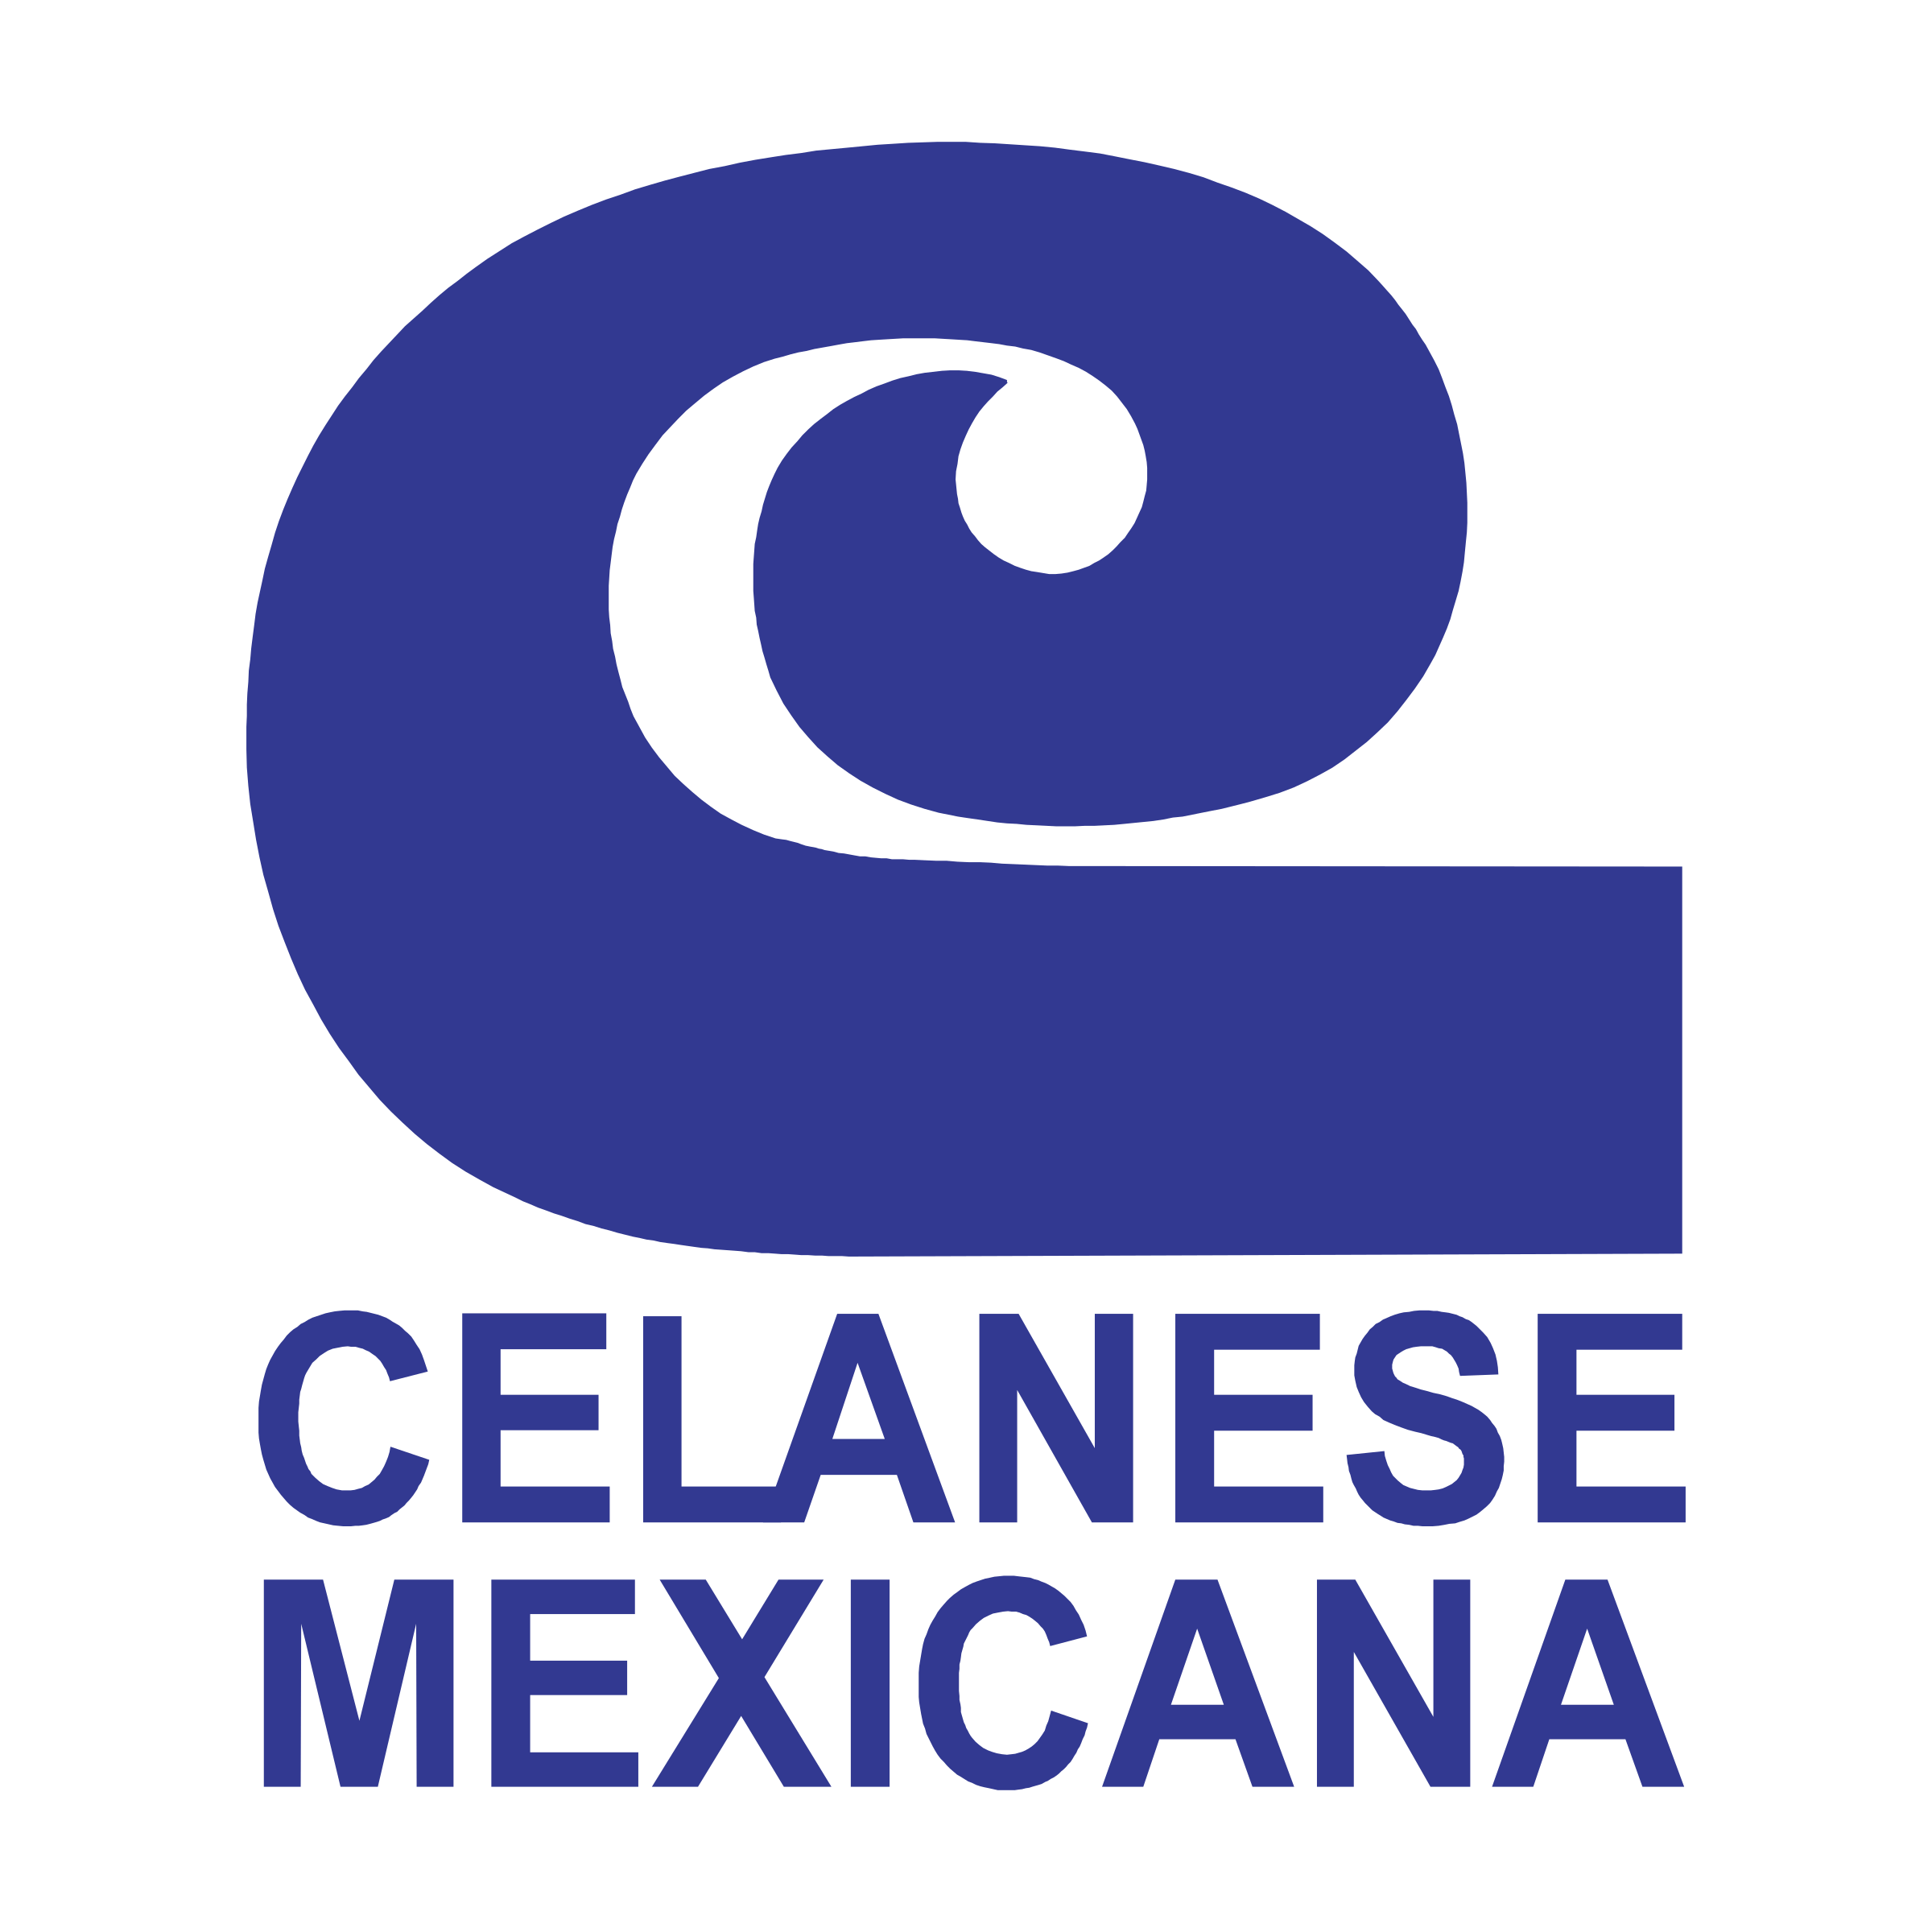 Celanese Logo - Celanese Mexicana Logo PNG Transparent & SVG Vector